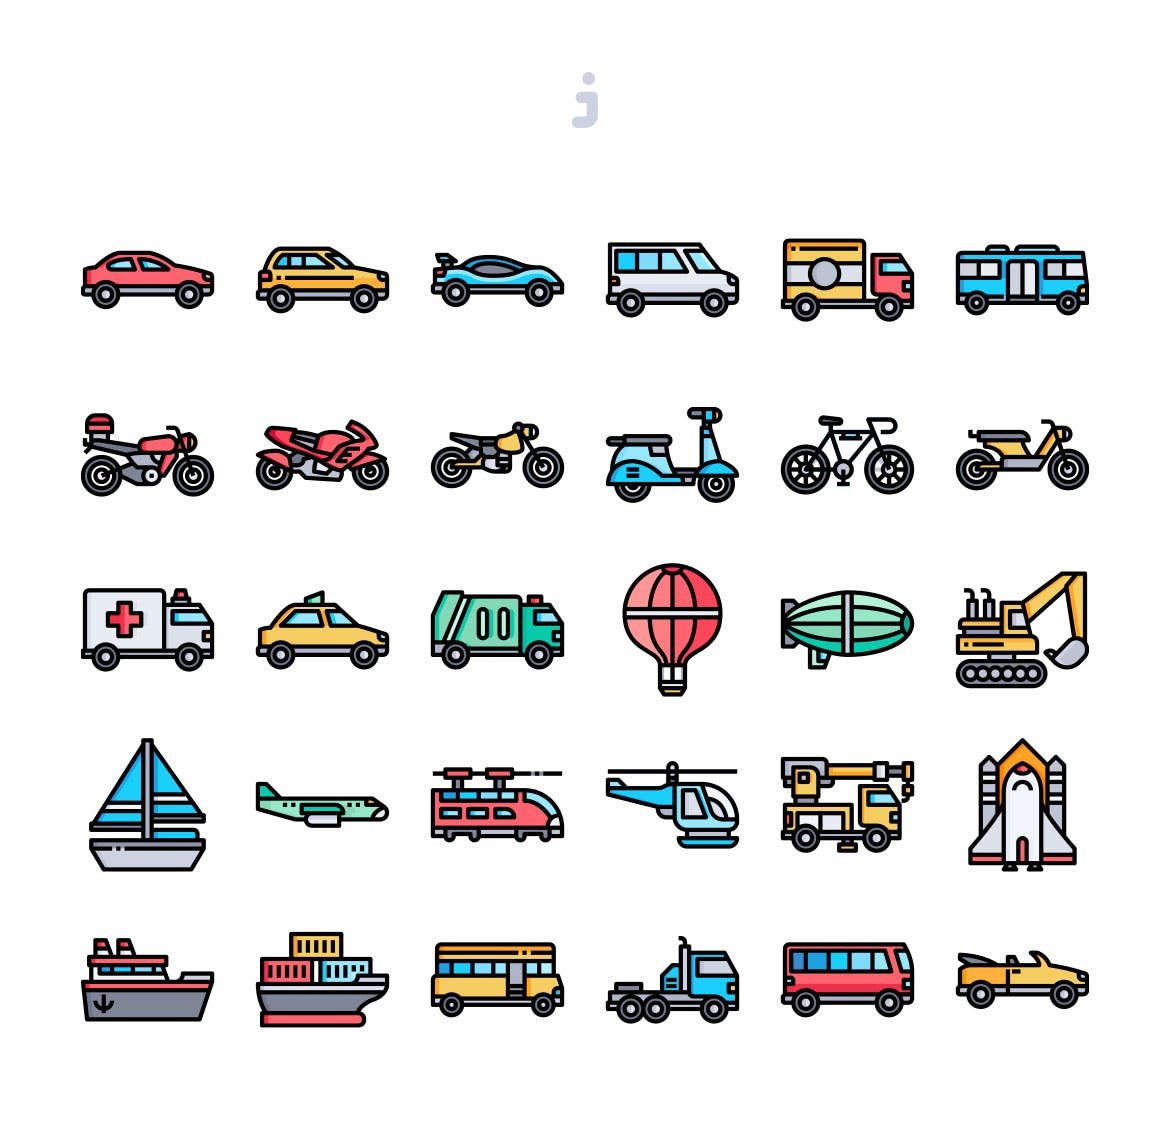 30枚交通工具矢量图标 30 Transportation Icons插图(1)